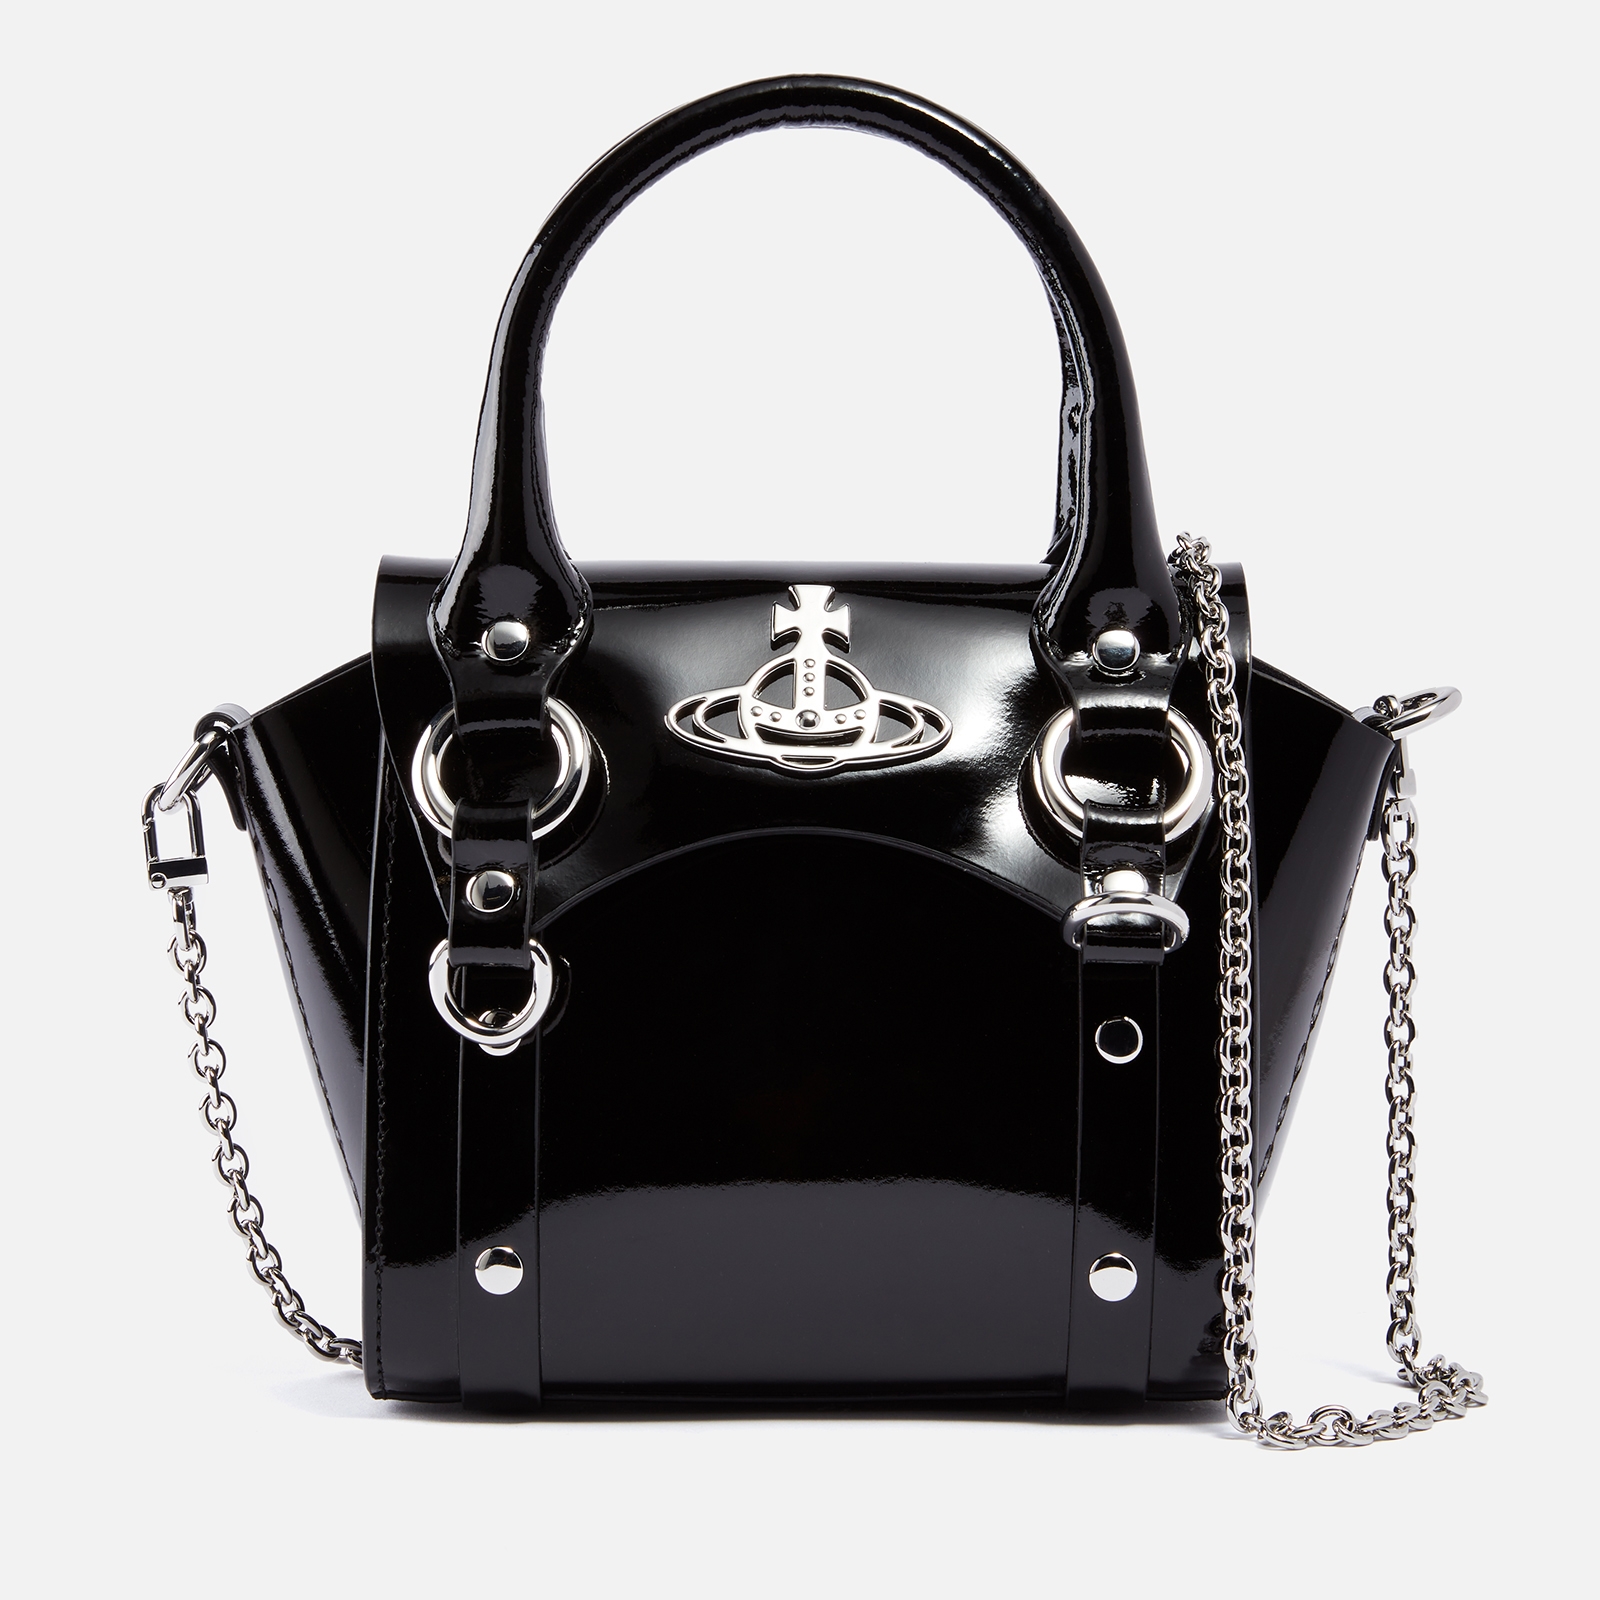 Vivienne Westwood Betty Mini Patent-Leather Bag